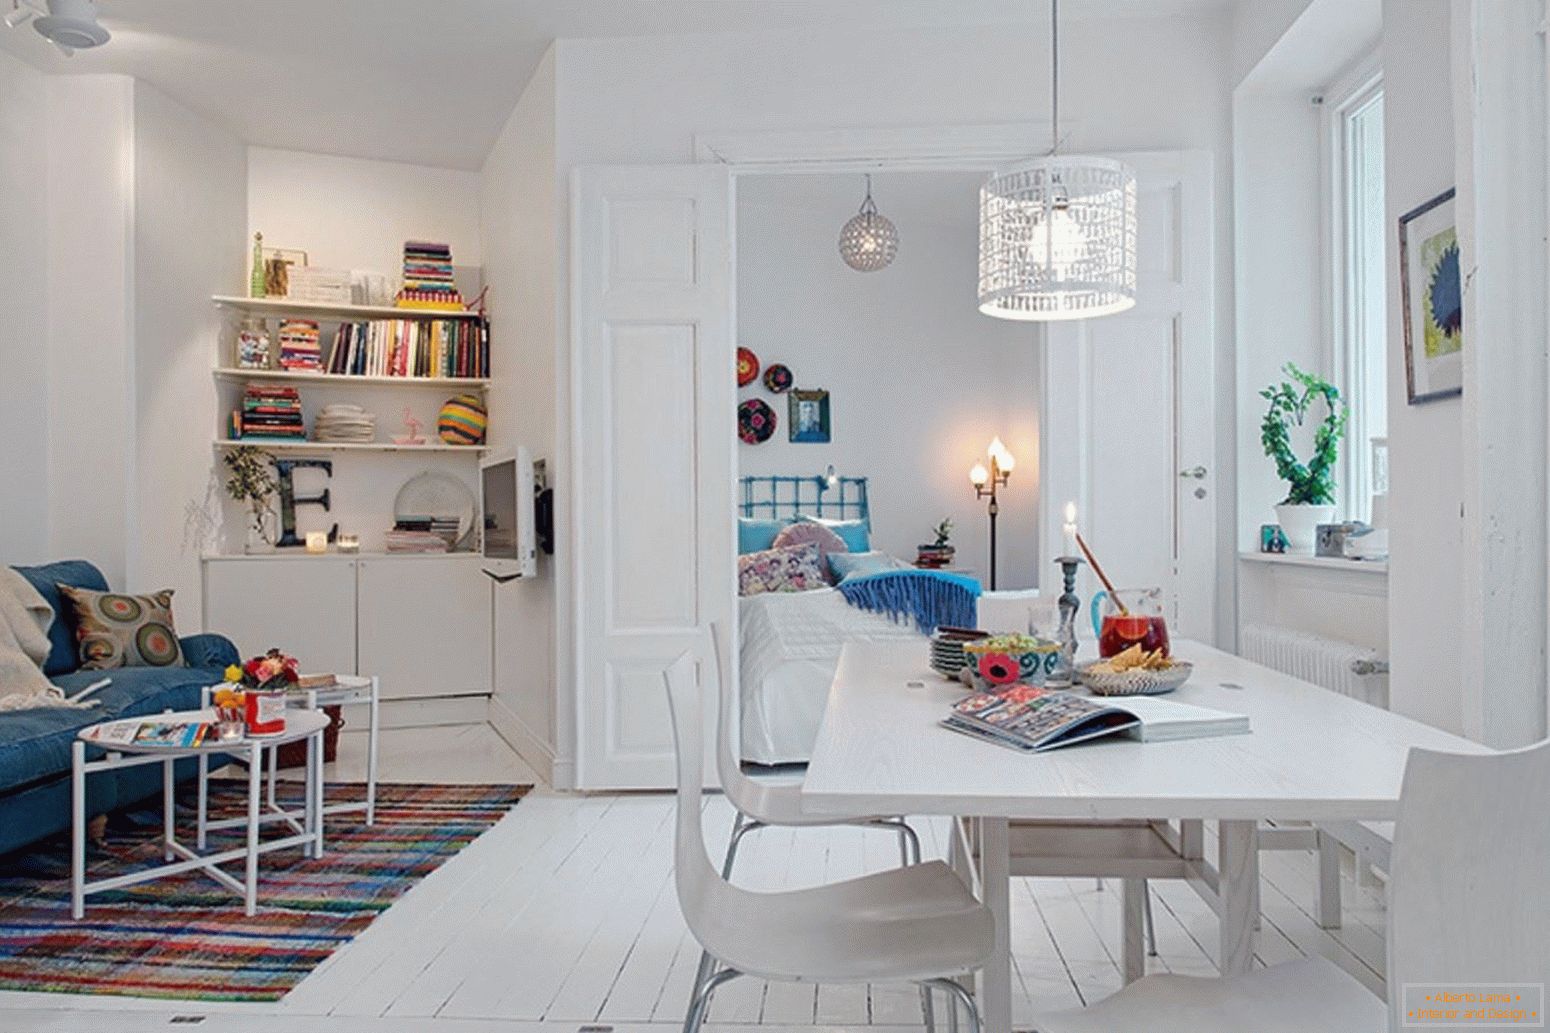 Living-dining room in Scandinavian style